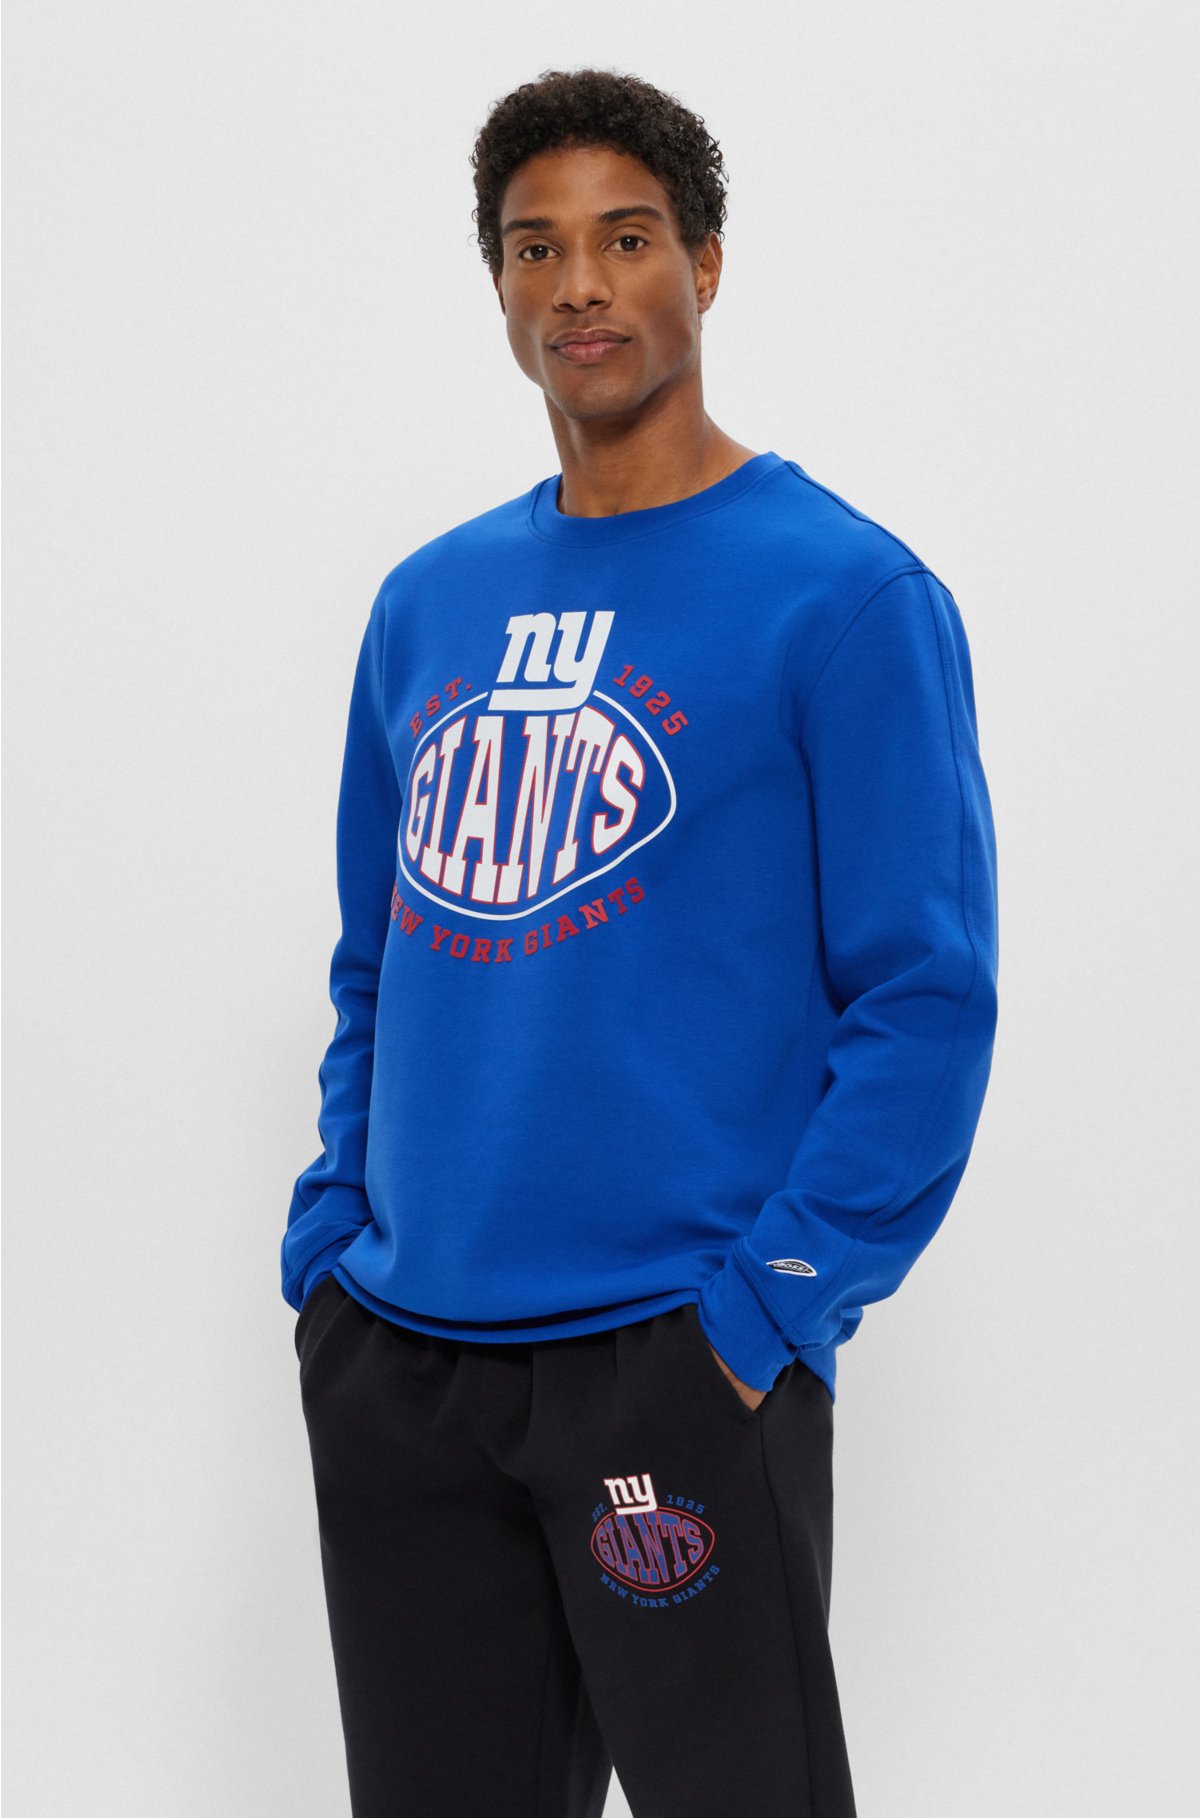 BOSS x NFL cotton-blend sweatshirt with collaborative branding, Giants